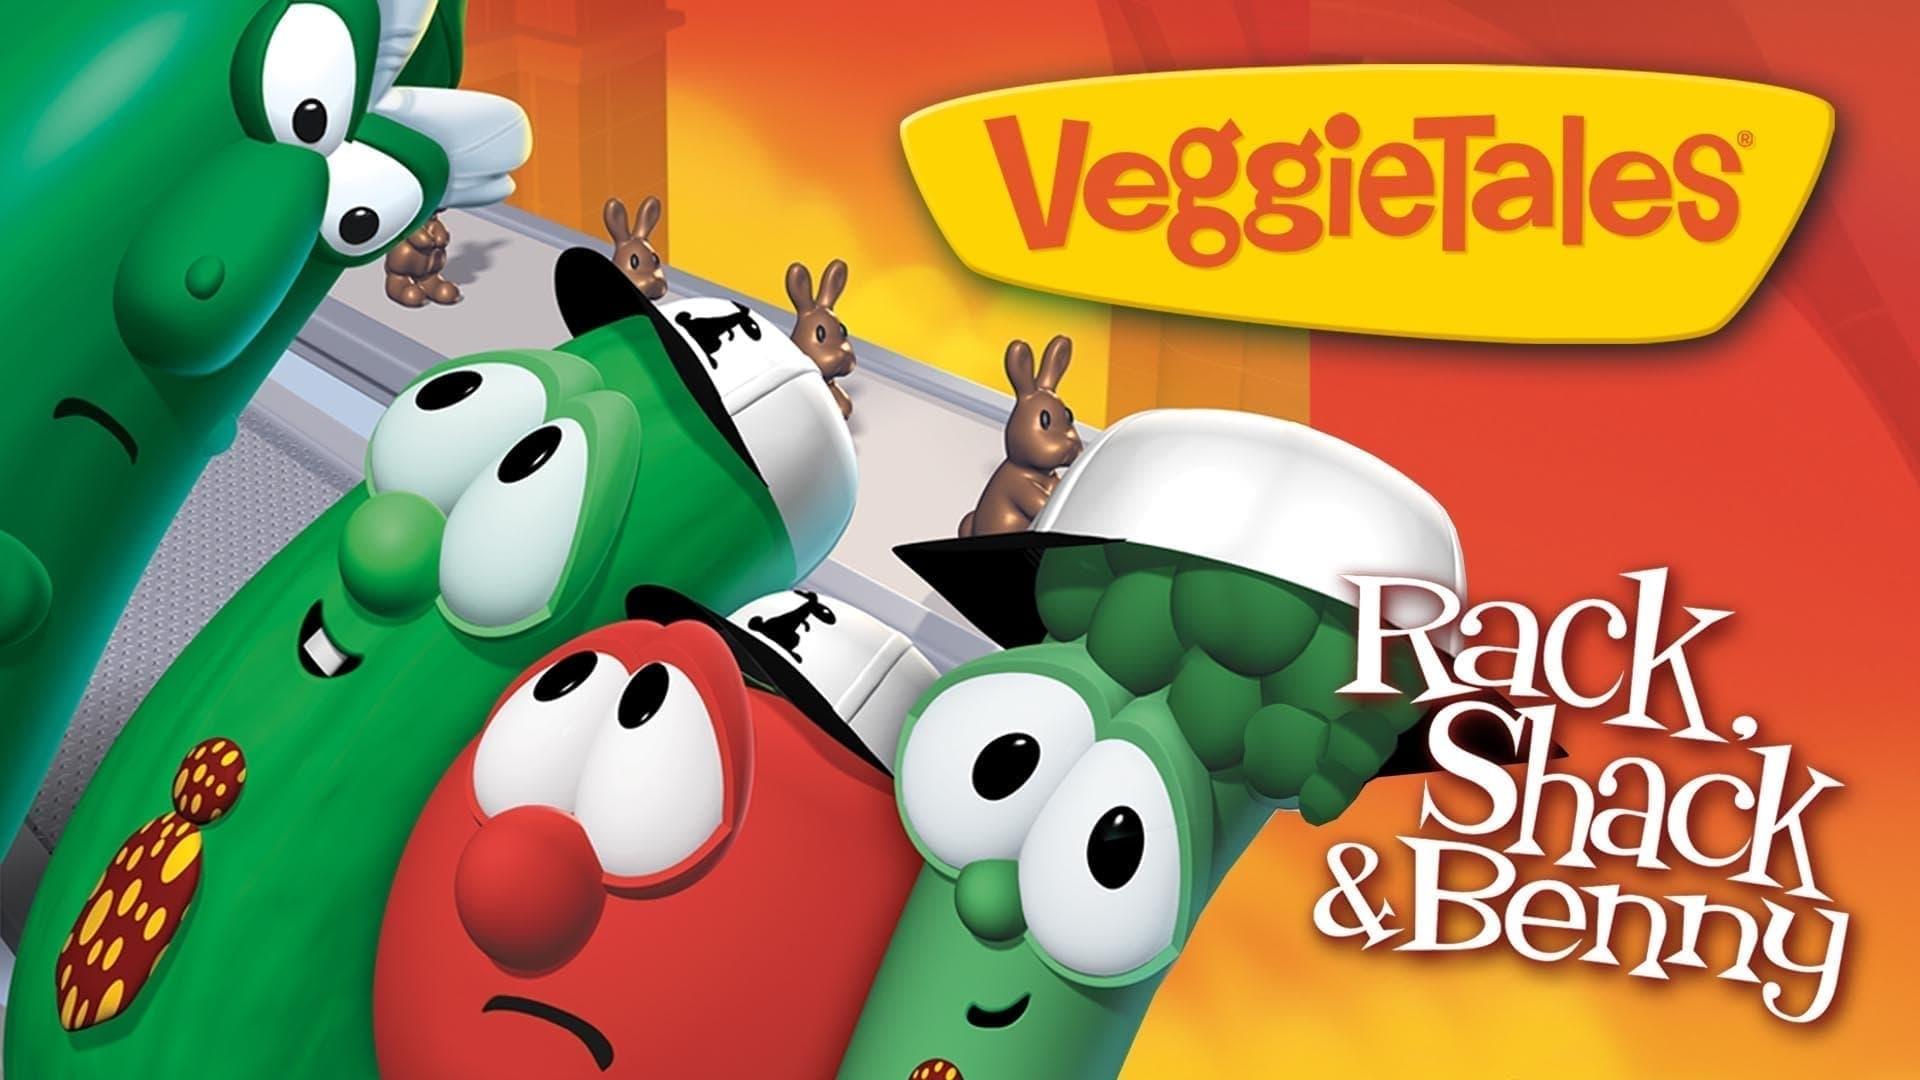 VeggieTales: Rack, Shack & Benny backdrop